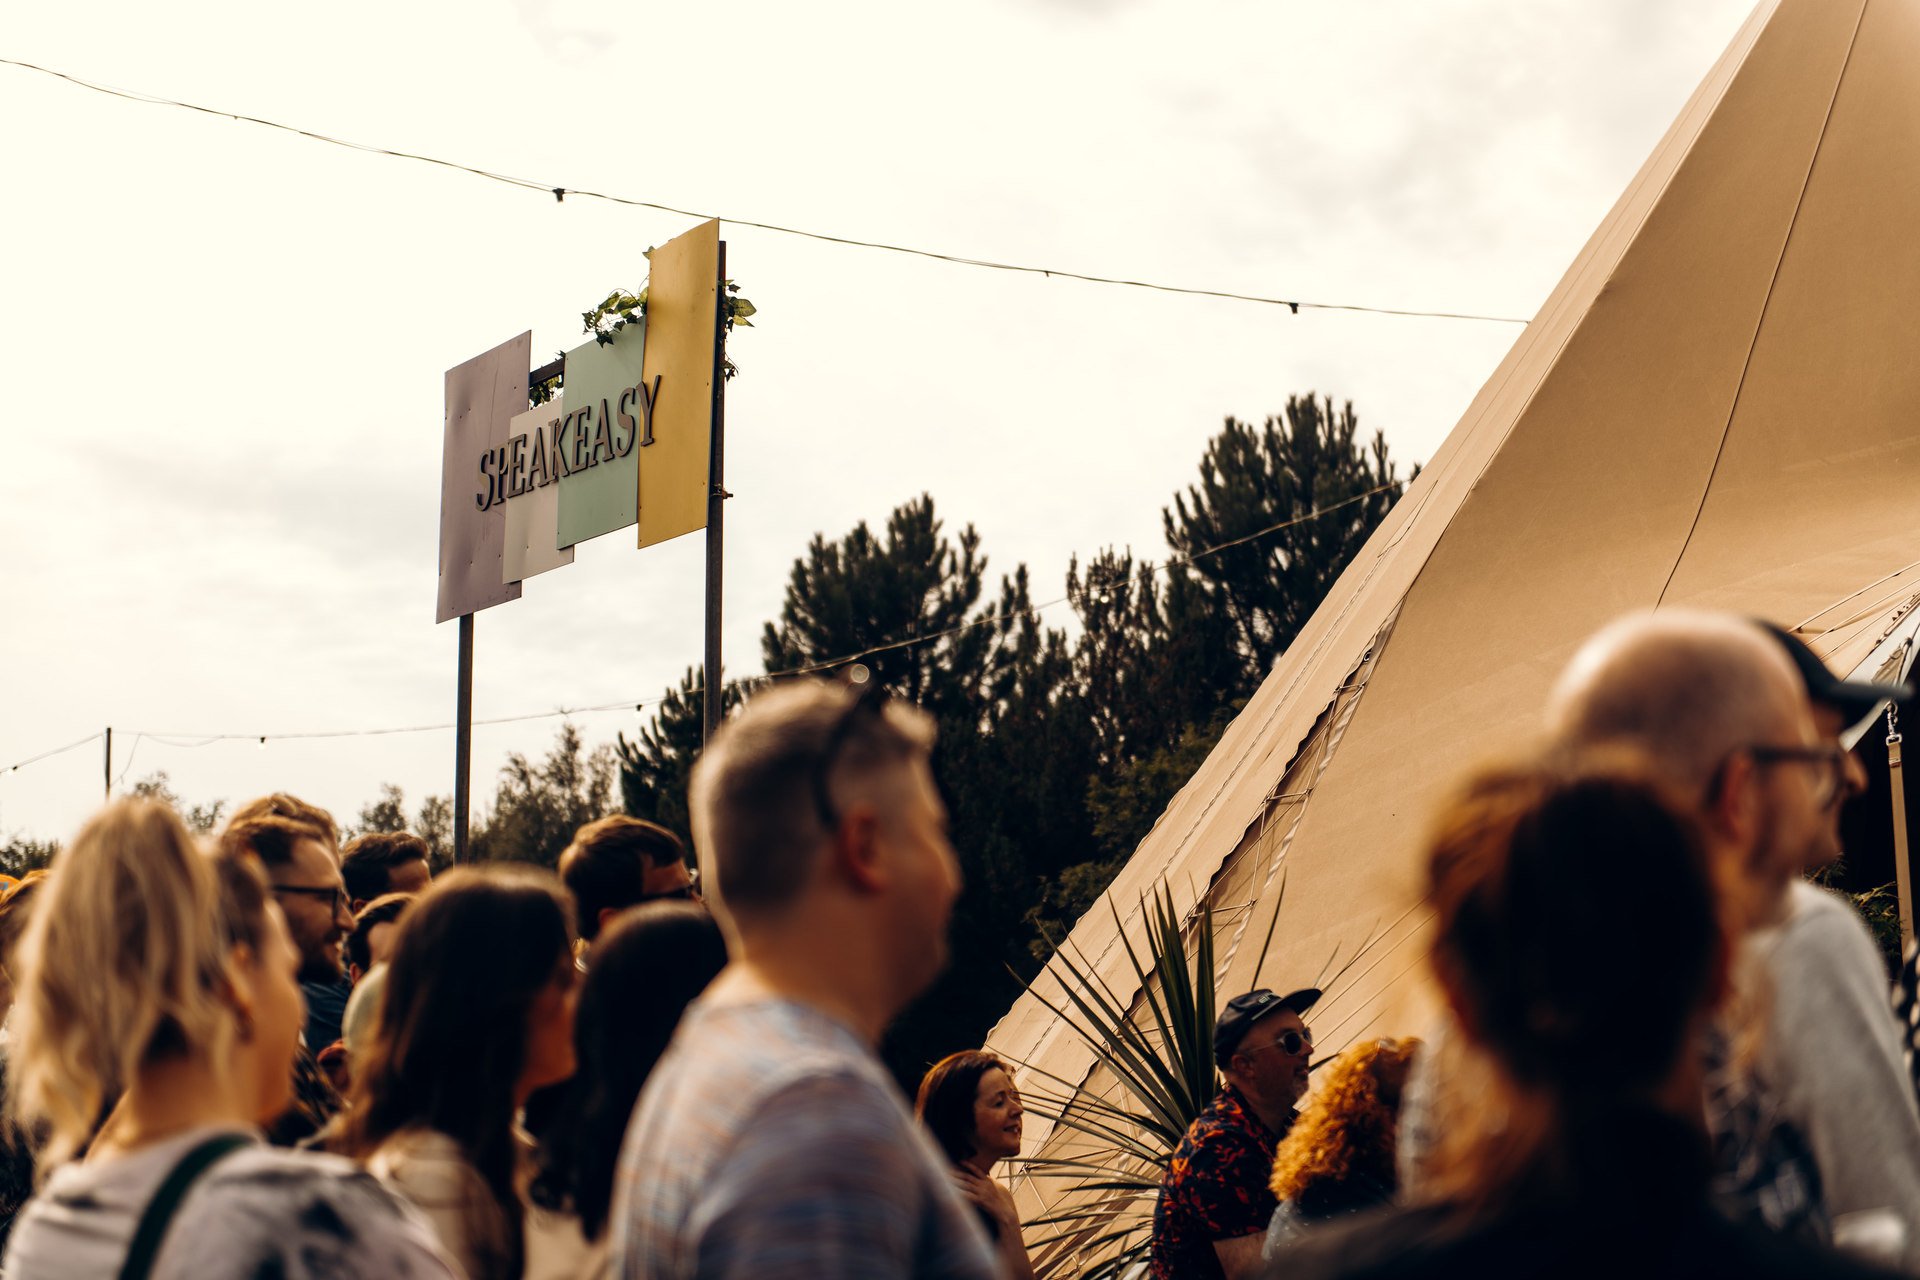 Connect Festival's Speakeasy tent returns 